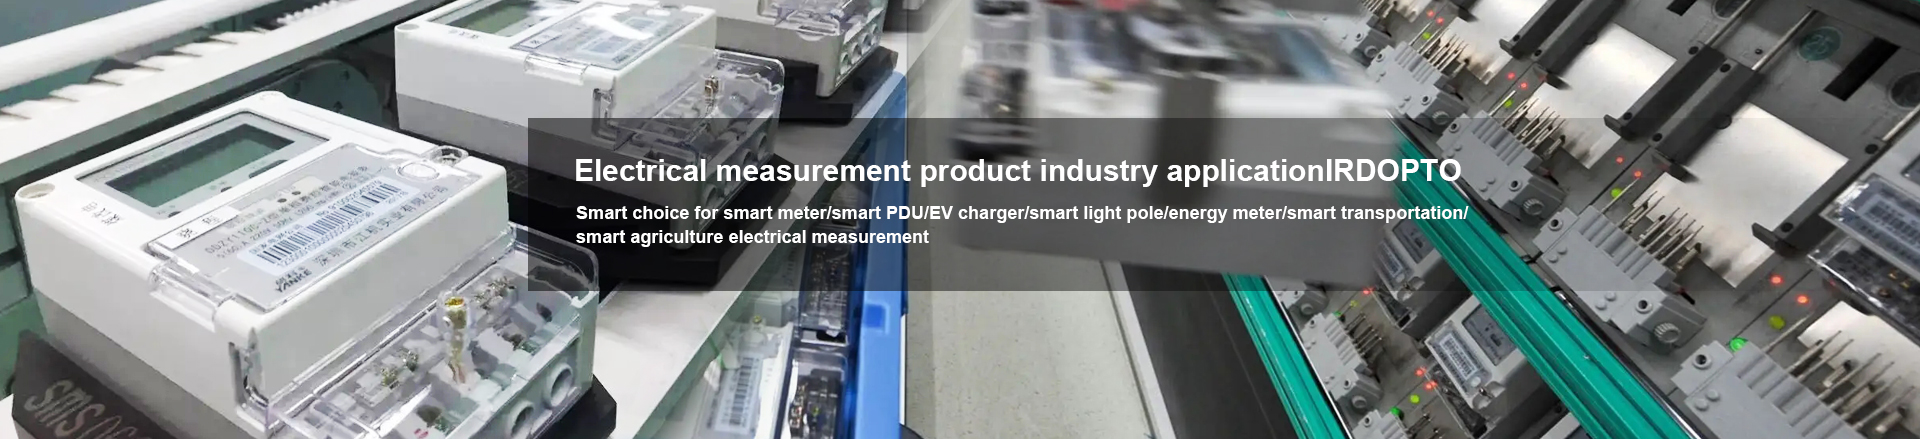 Electrical measurement product industry applicationIRDOPTO